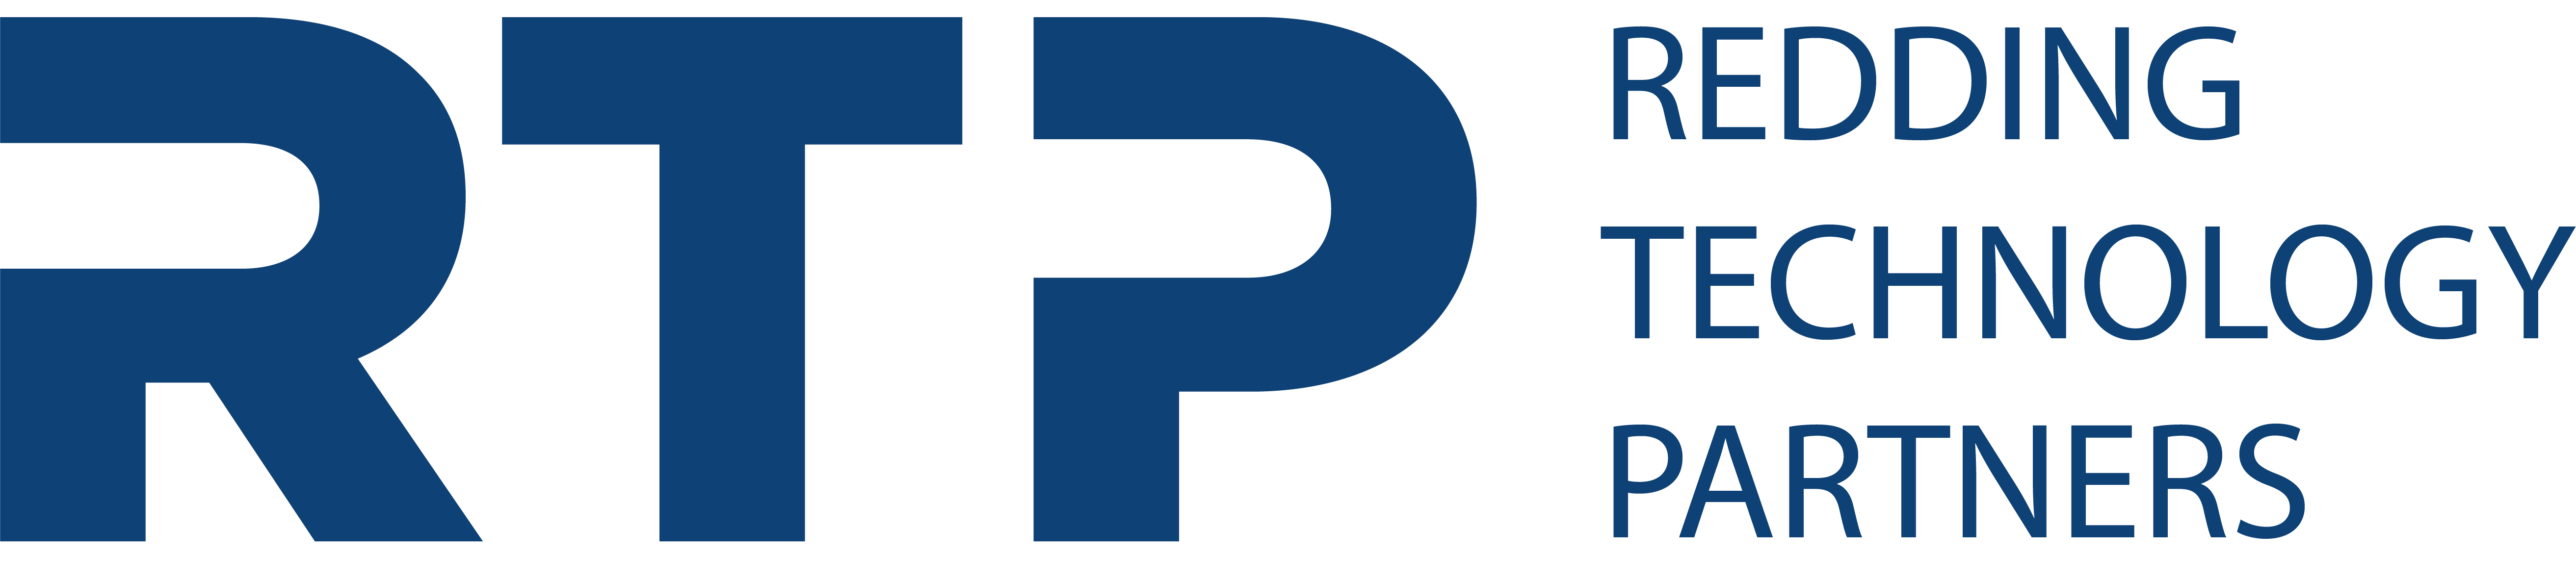 RTP logo